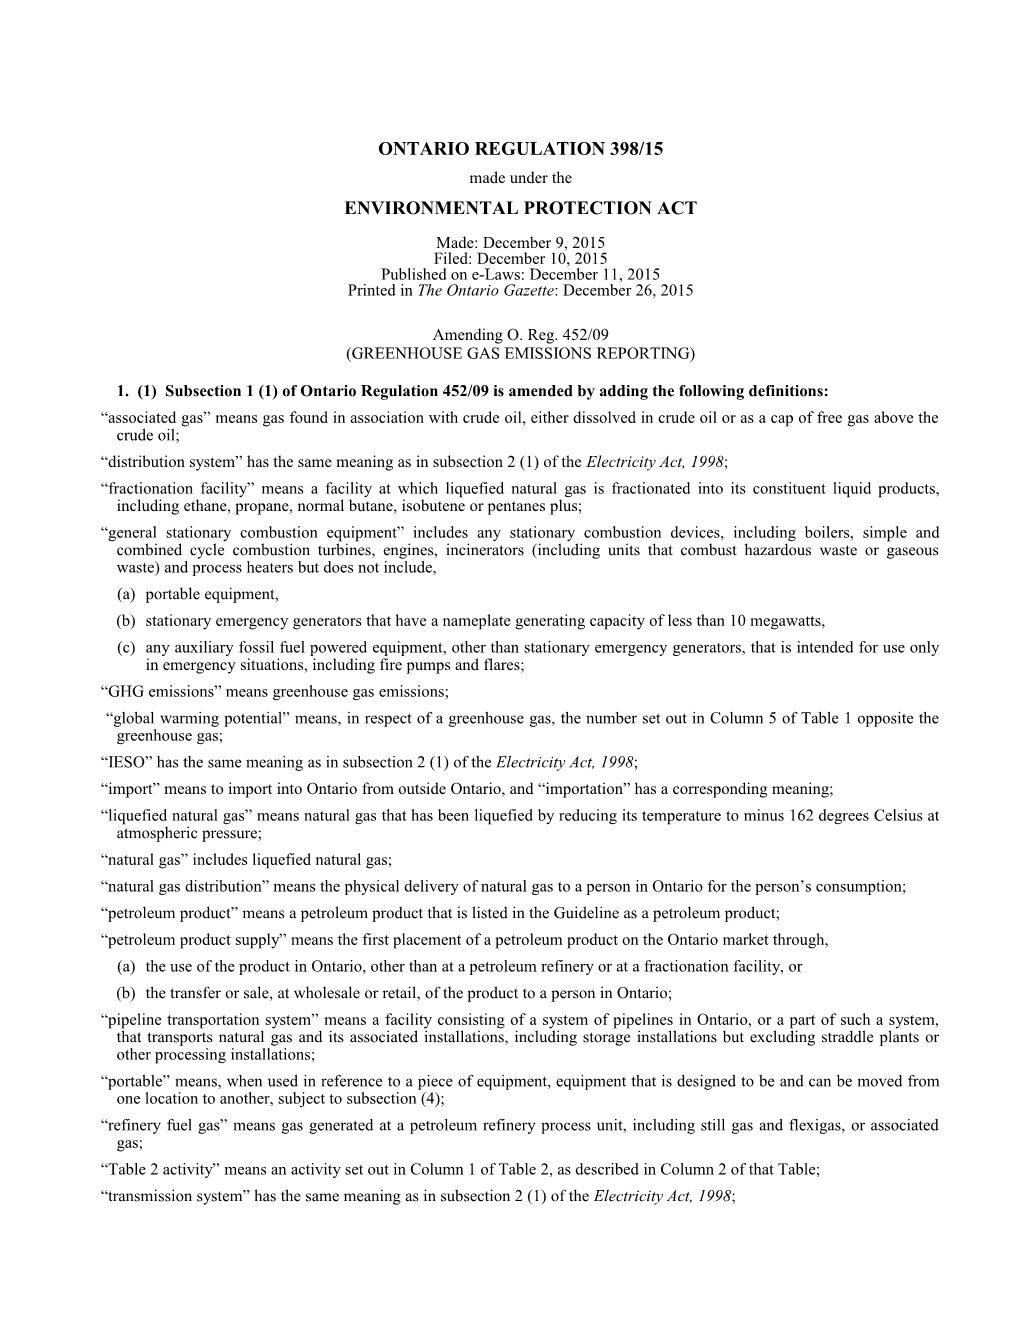 ENVIRONMENTAL PROTECTION ACT - O. Reg. 398/15